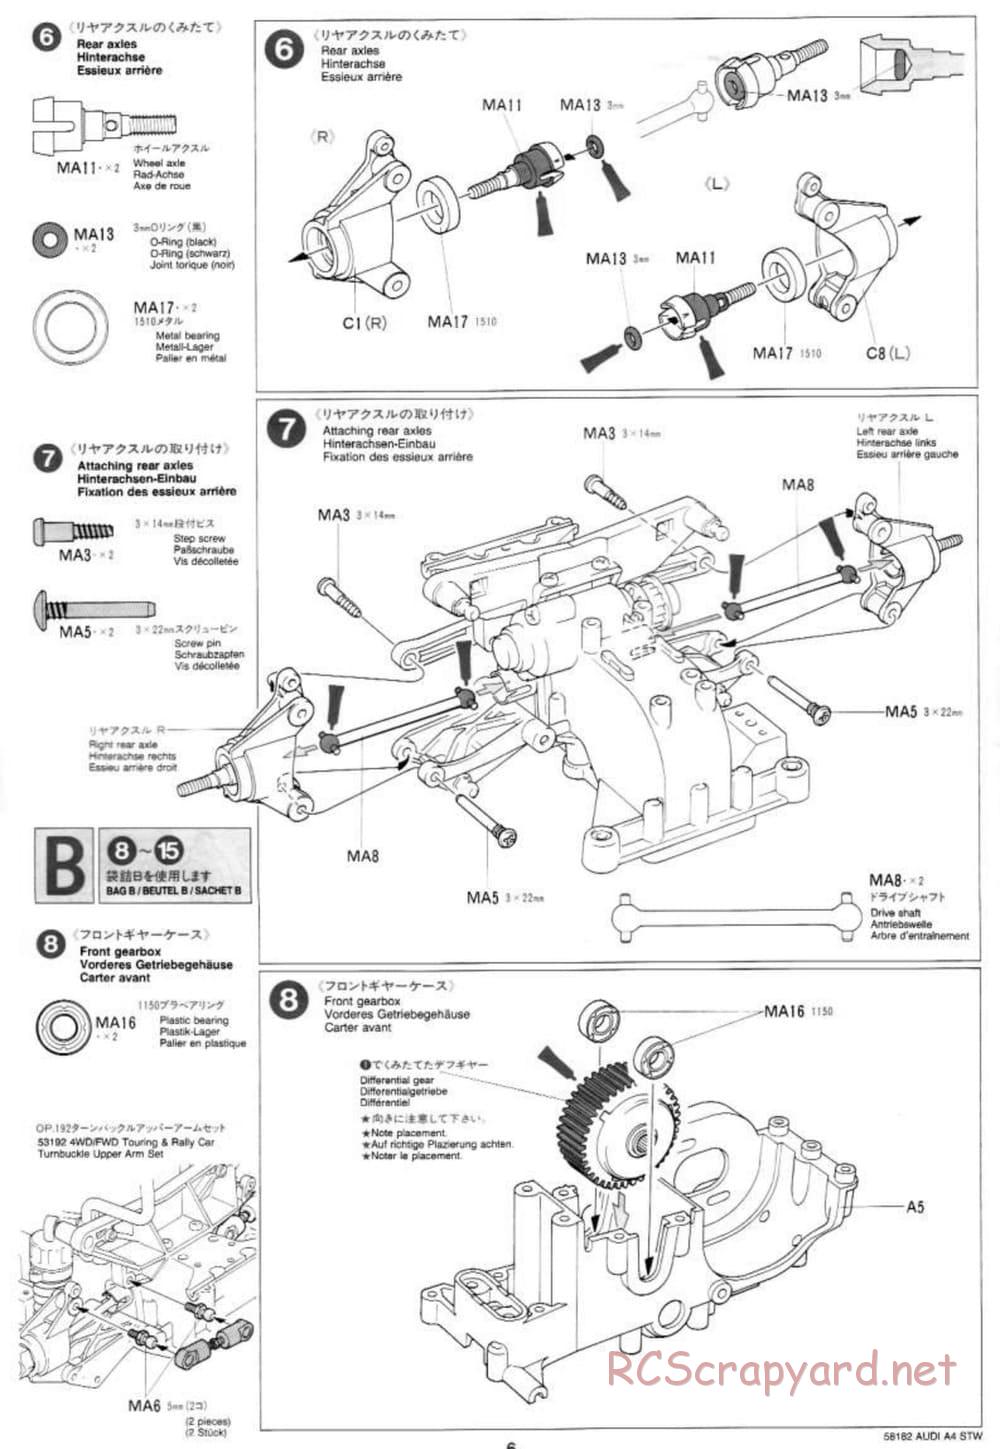 Tamiya - Audi A4 STW - TA-03F Chassis - Manual - Page 6